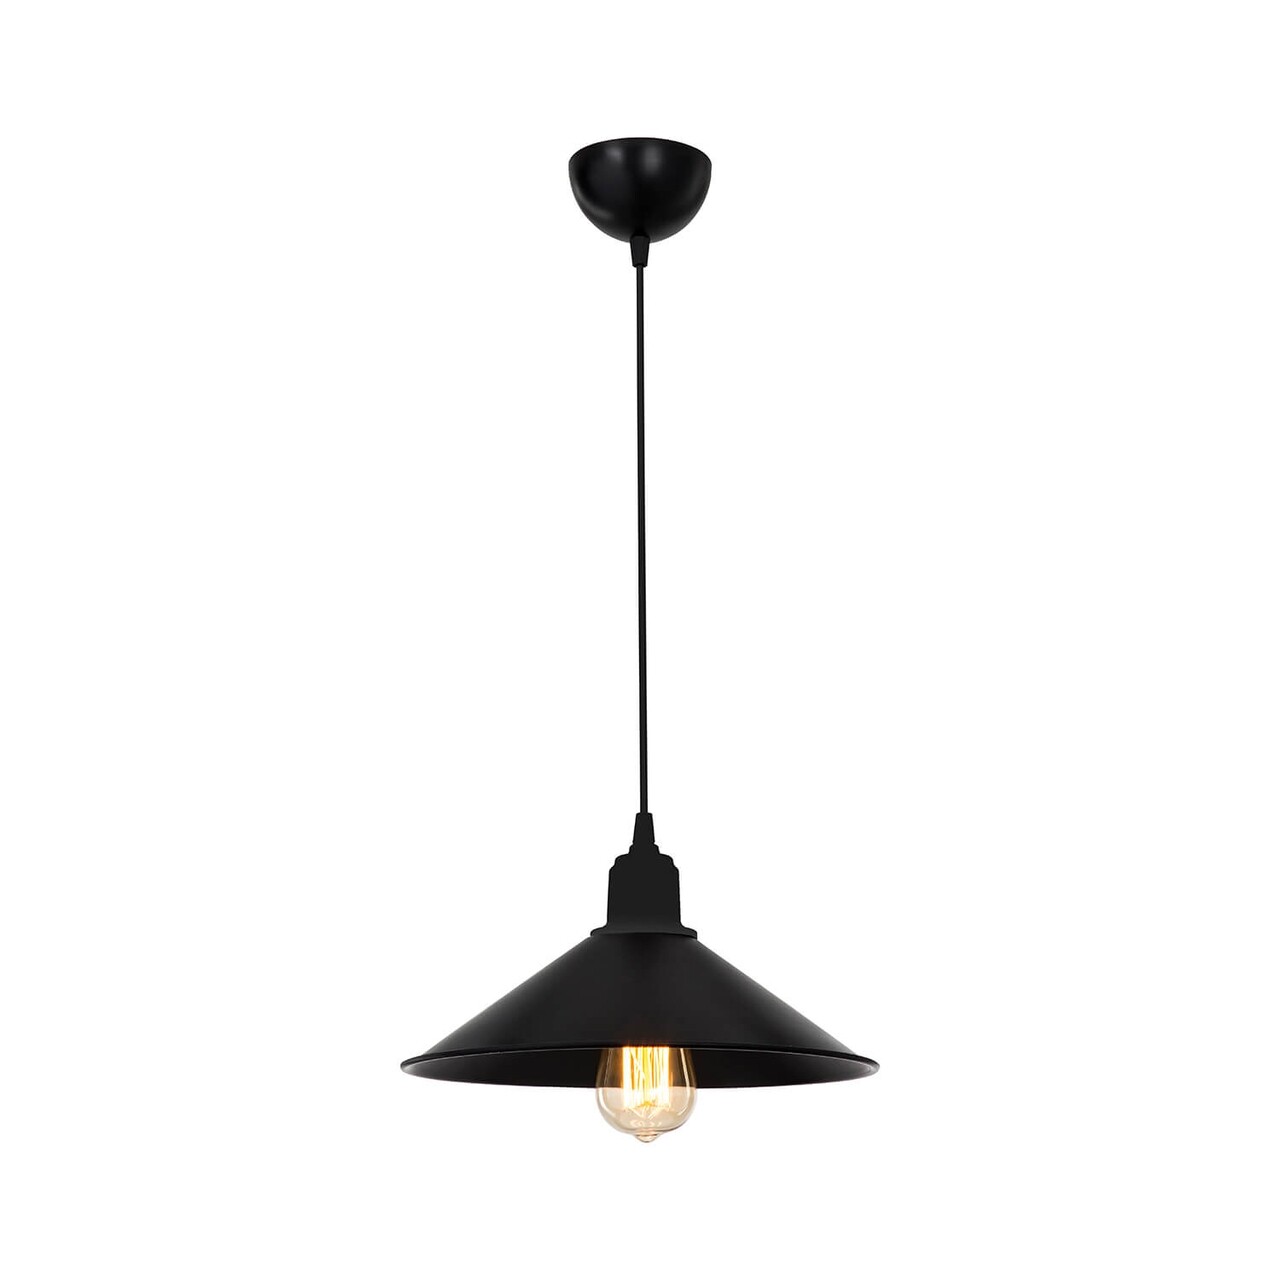 Siyah csillár, MDL.4158, Squid Lighting, 30x62 cm, 60W, fekete